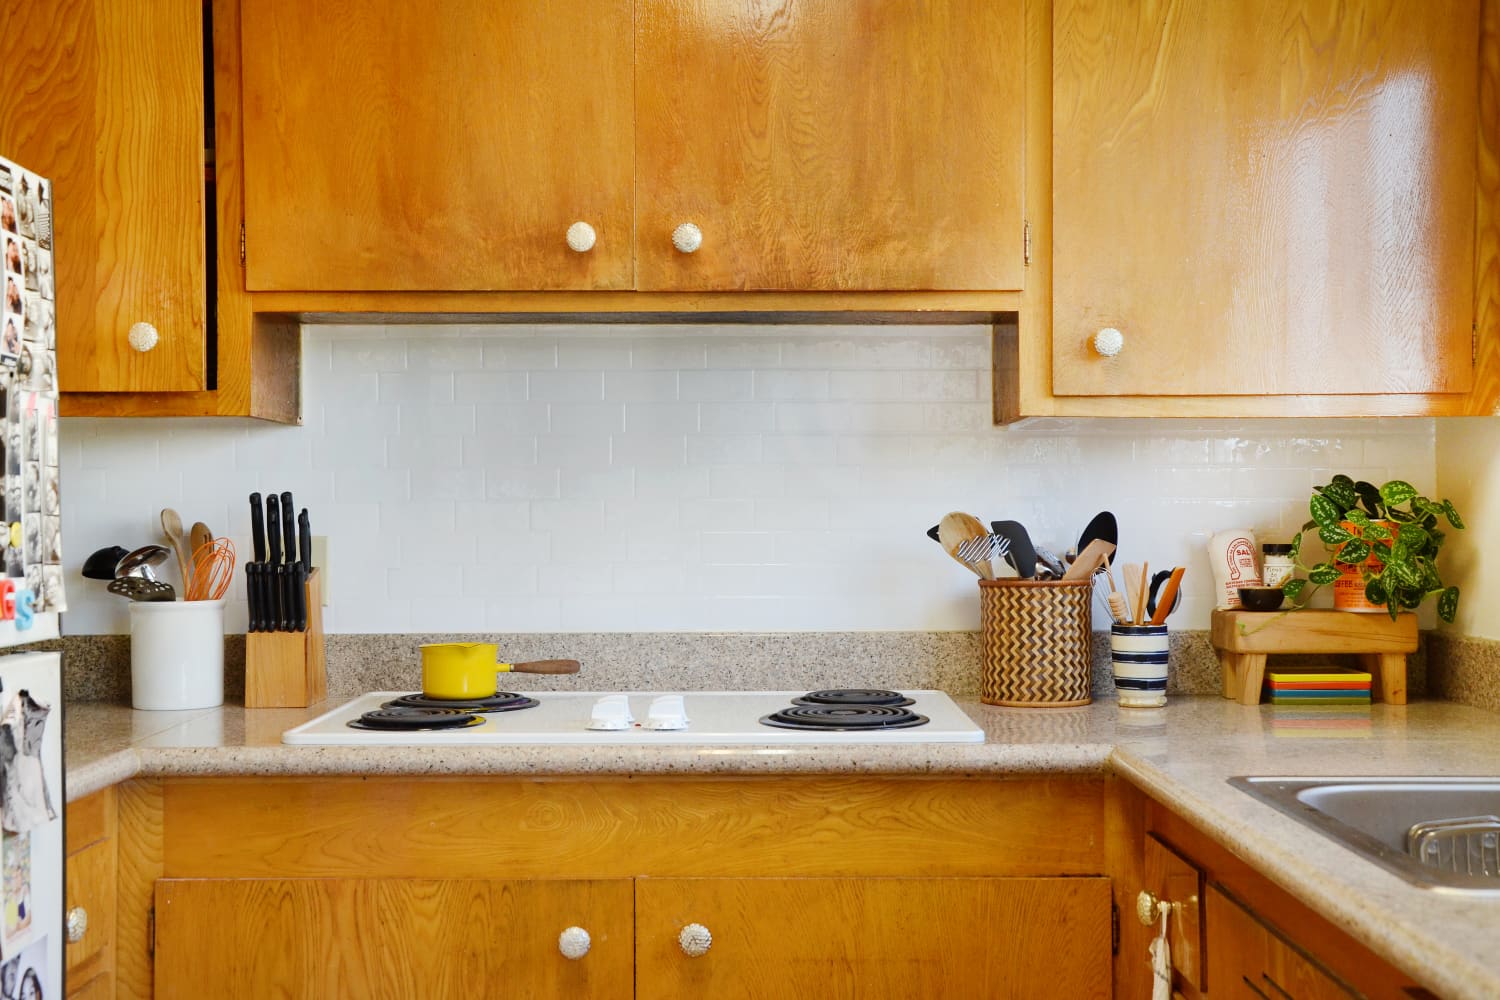 9 Kitchen Backsplash Ideas To Inspire Your Next Remodel (Video)